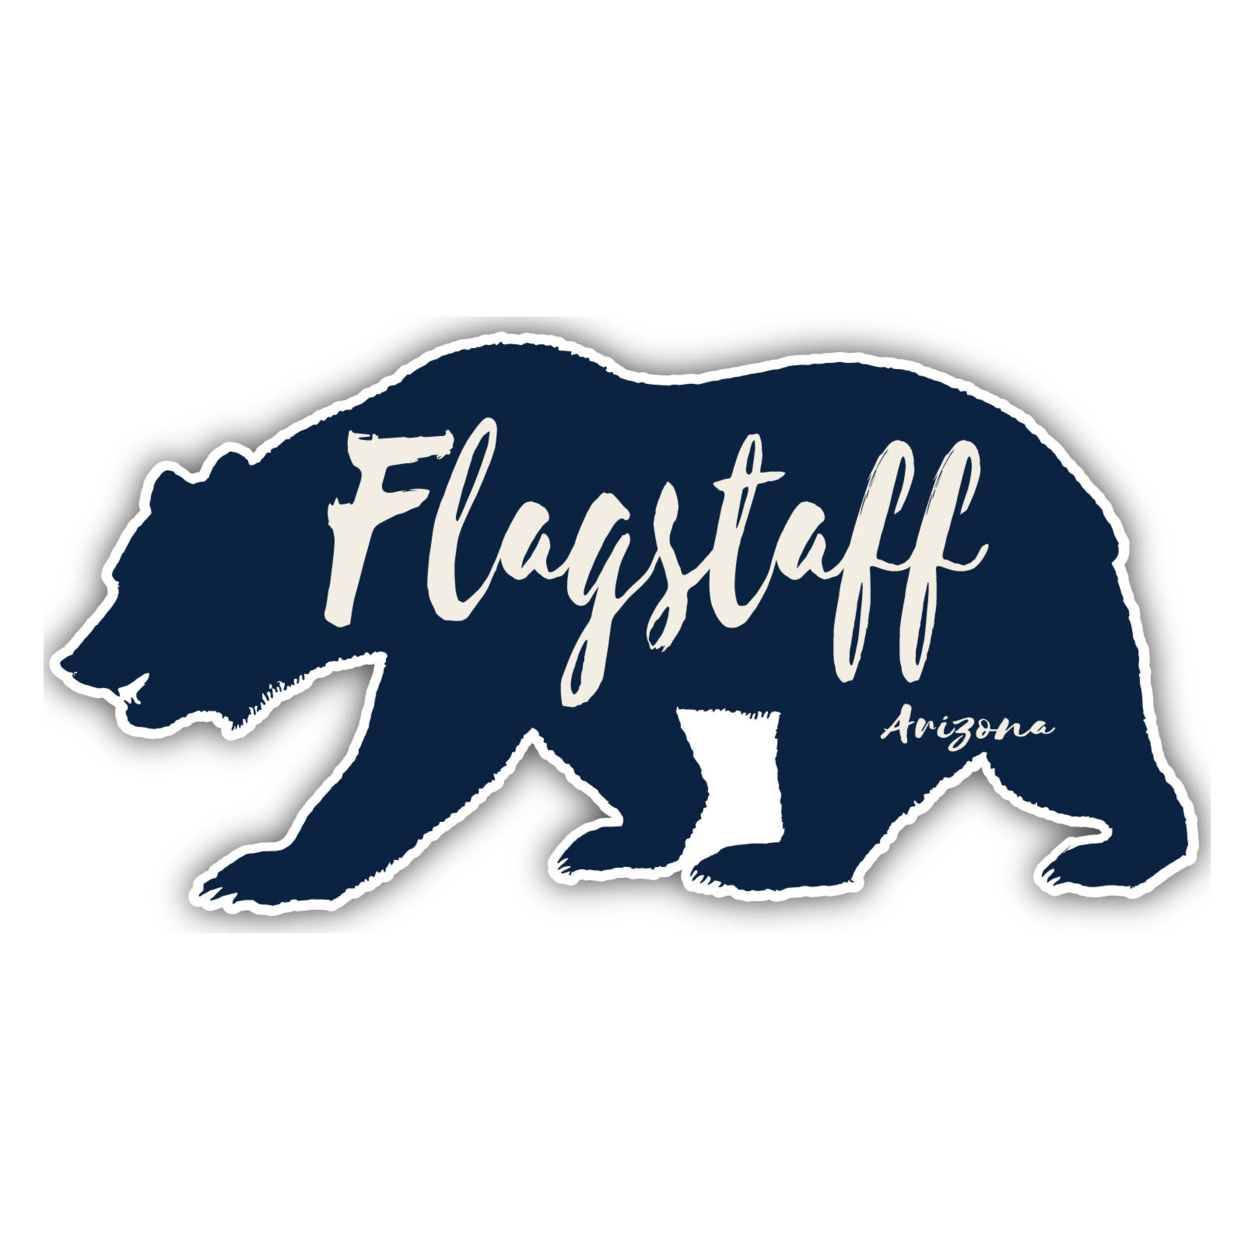 Flagstaff Arizona Souvenir Decorative Stickers (Choose Theme And Size) - 4-Pack, 4-Inch, Bear